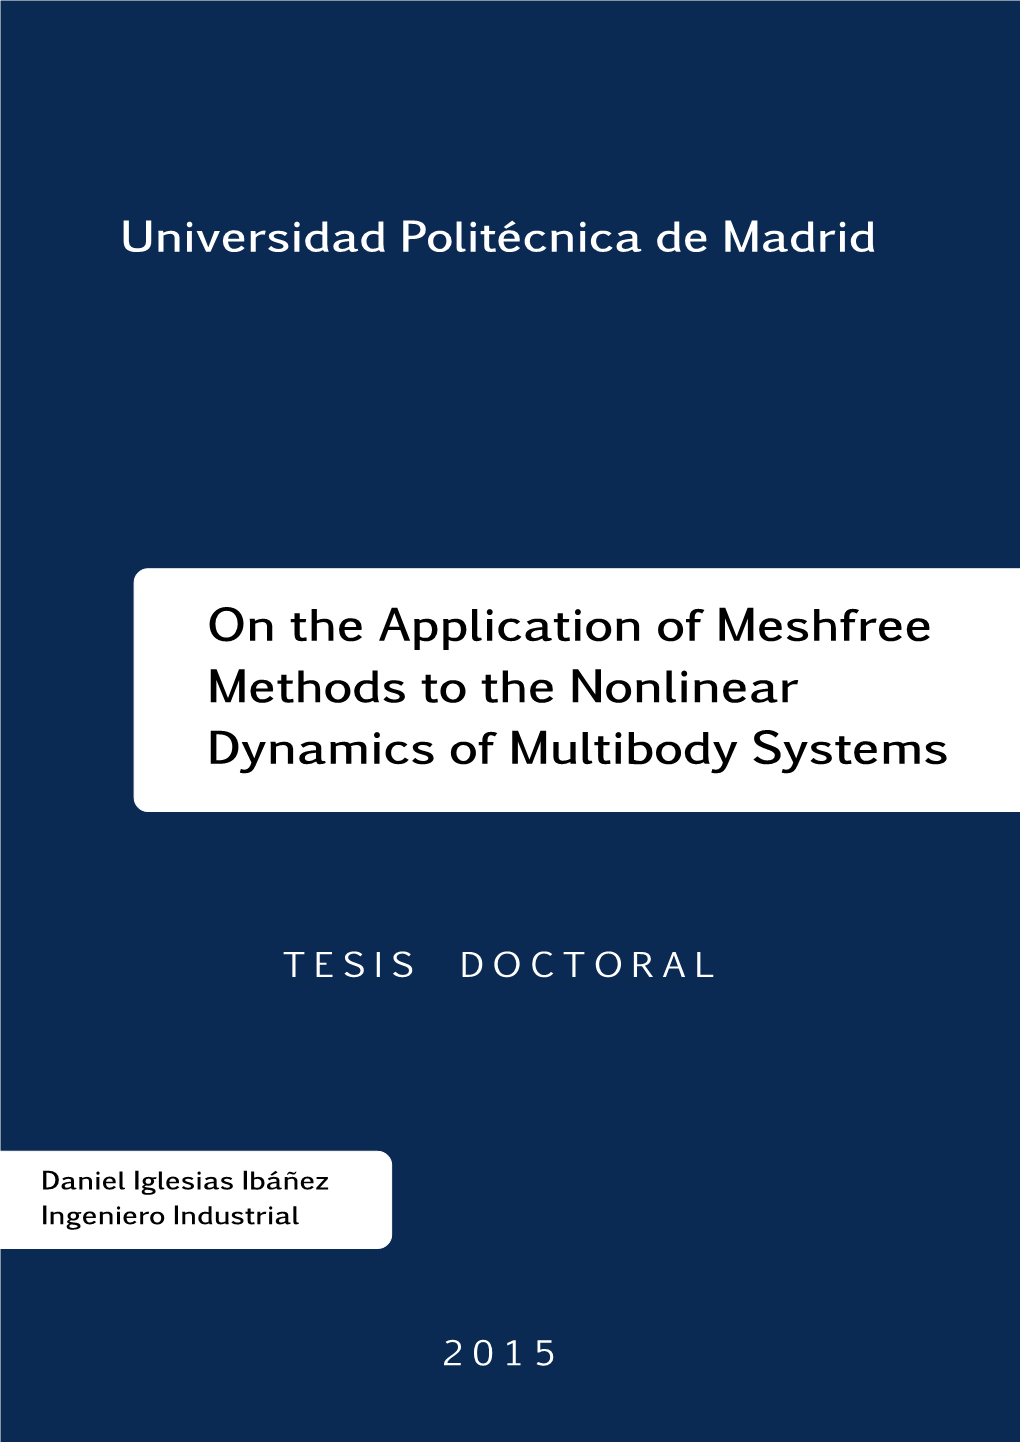 Meshfree Methods in Nonlinear Multibody Analysis